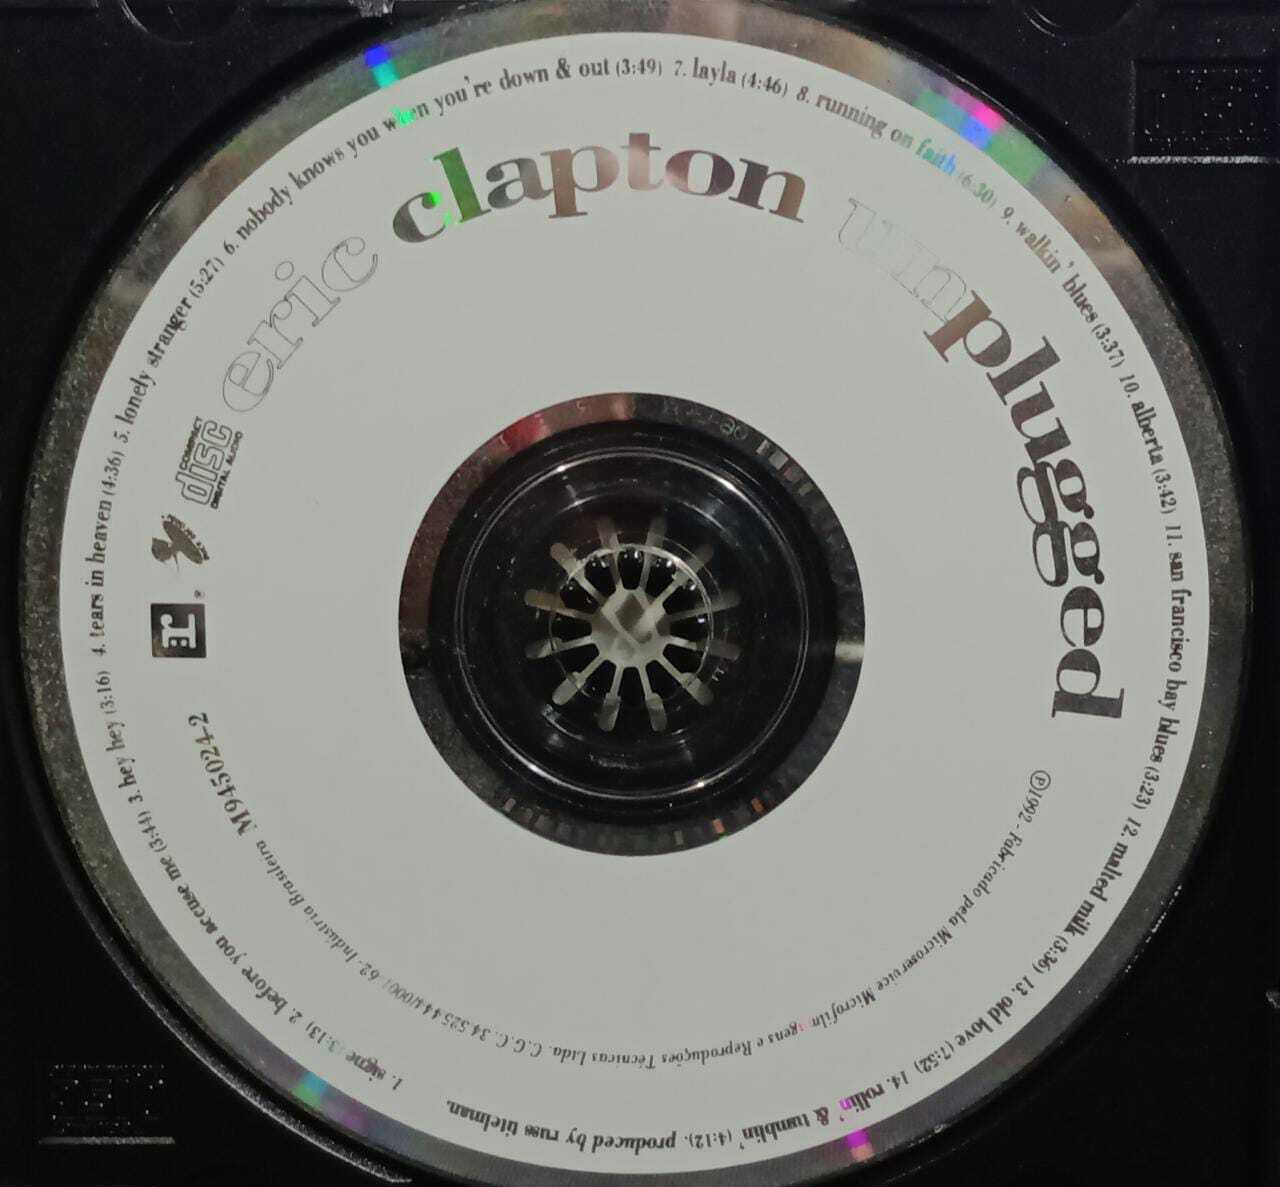 CD - Eric Clapton - Unplugged